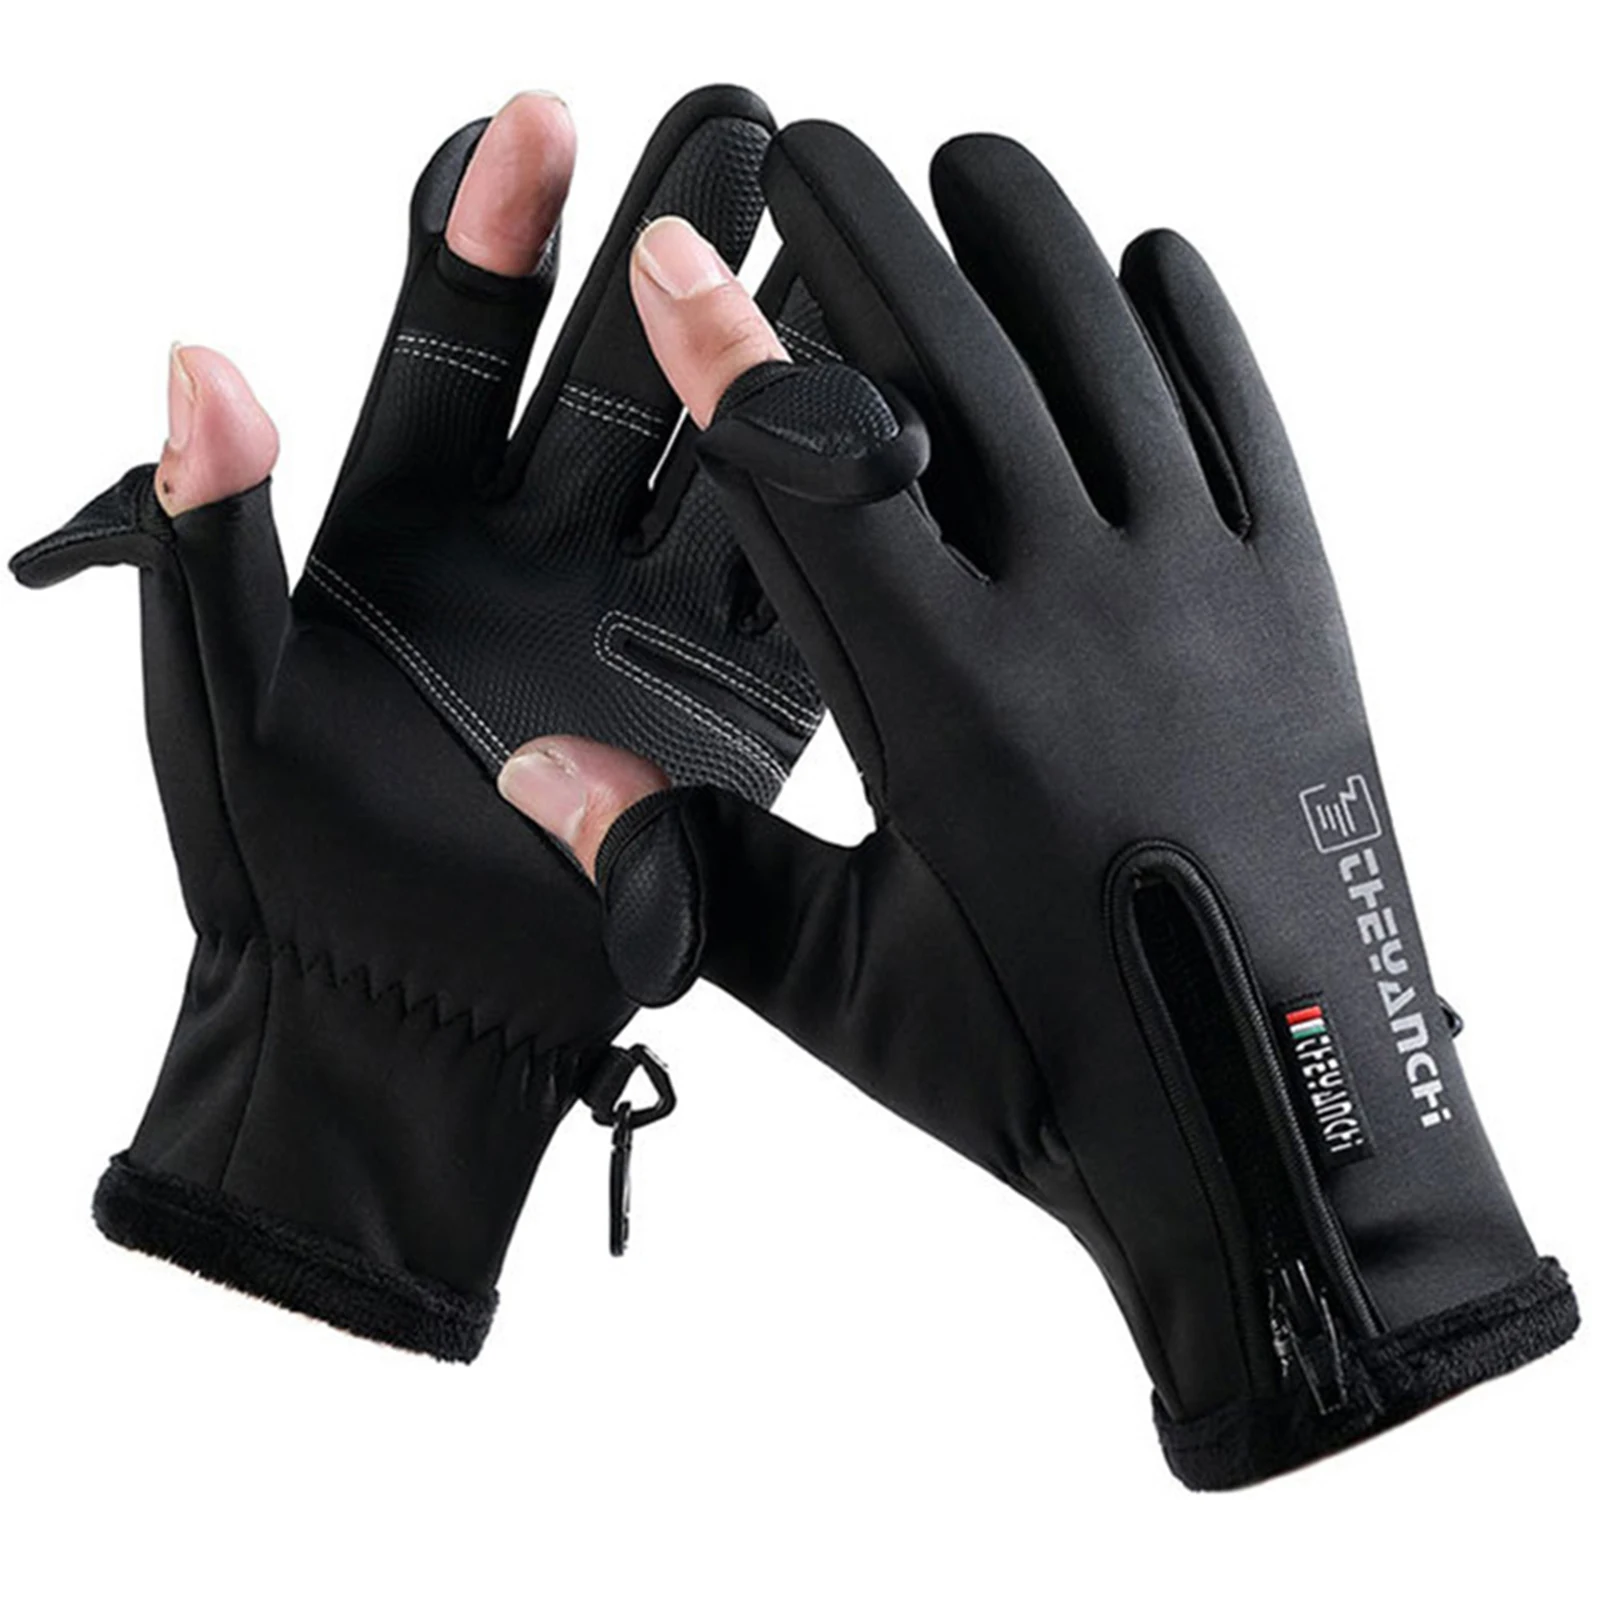 Winter Warn Gloves Ski Driving Waterproof Touch Screen Military Men Women Gloves 